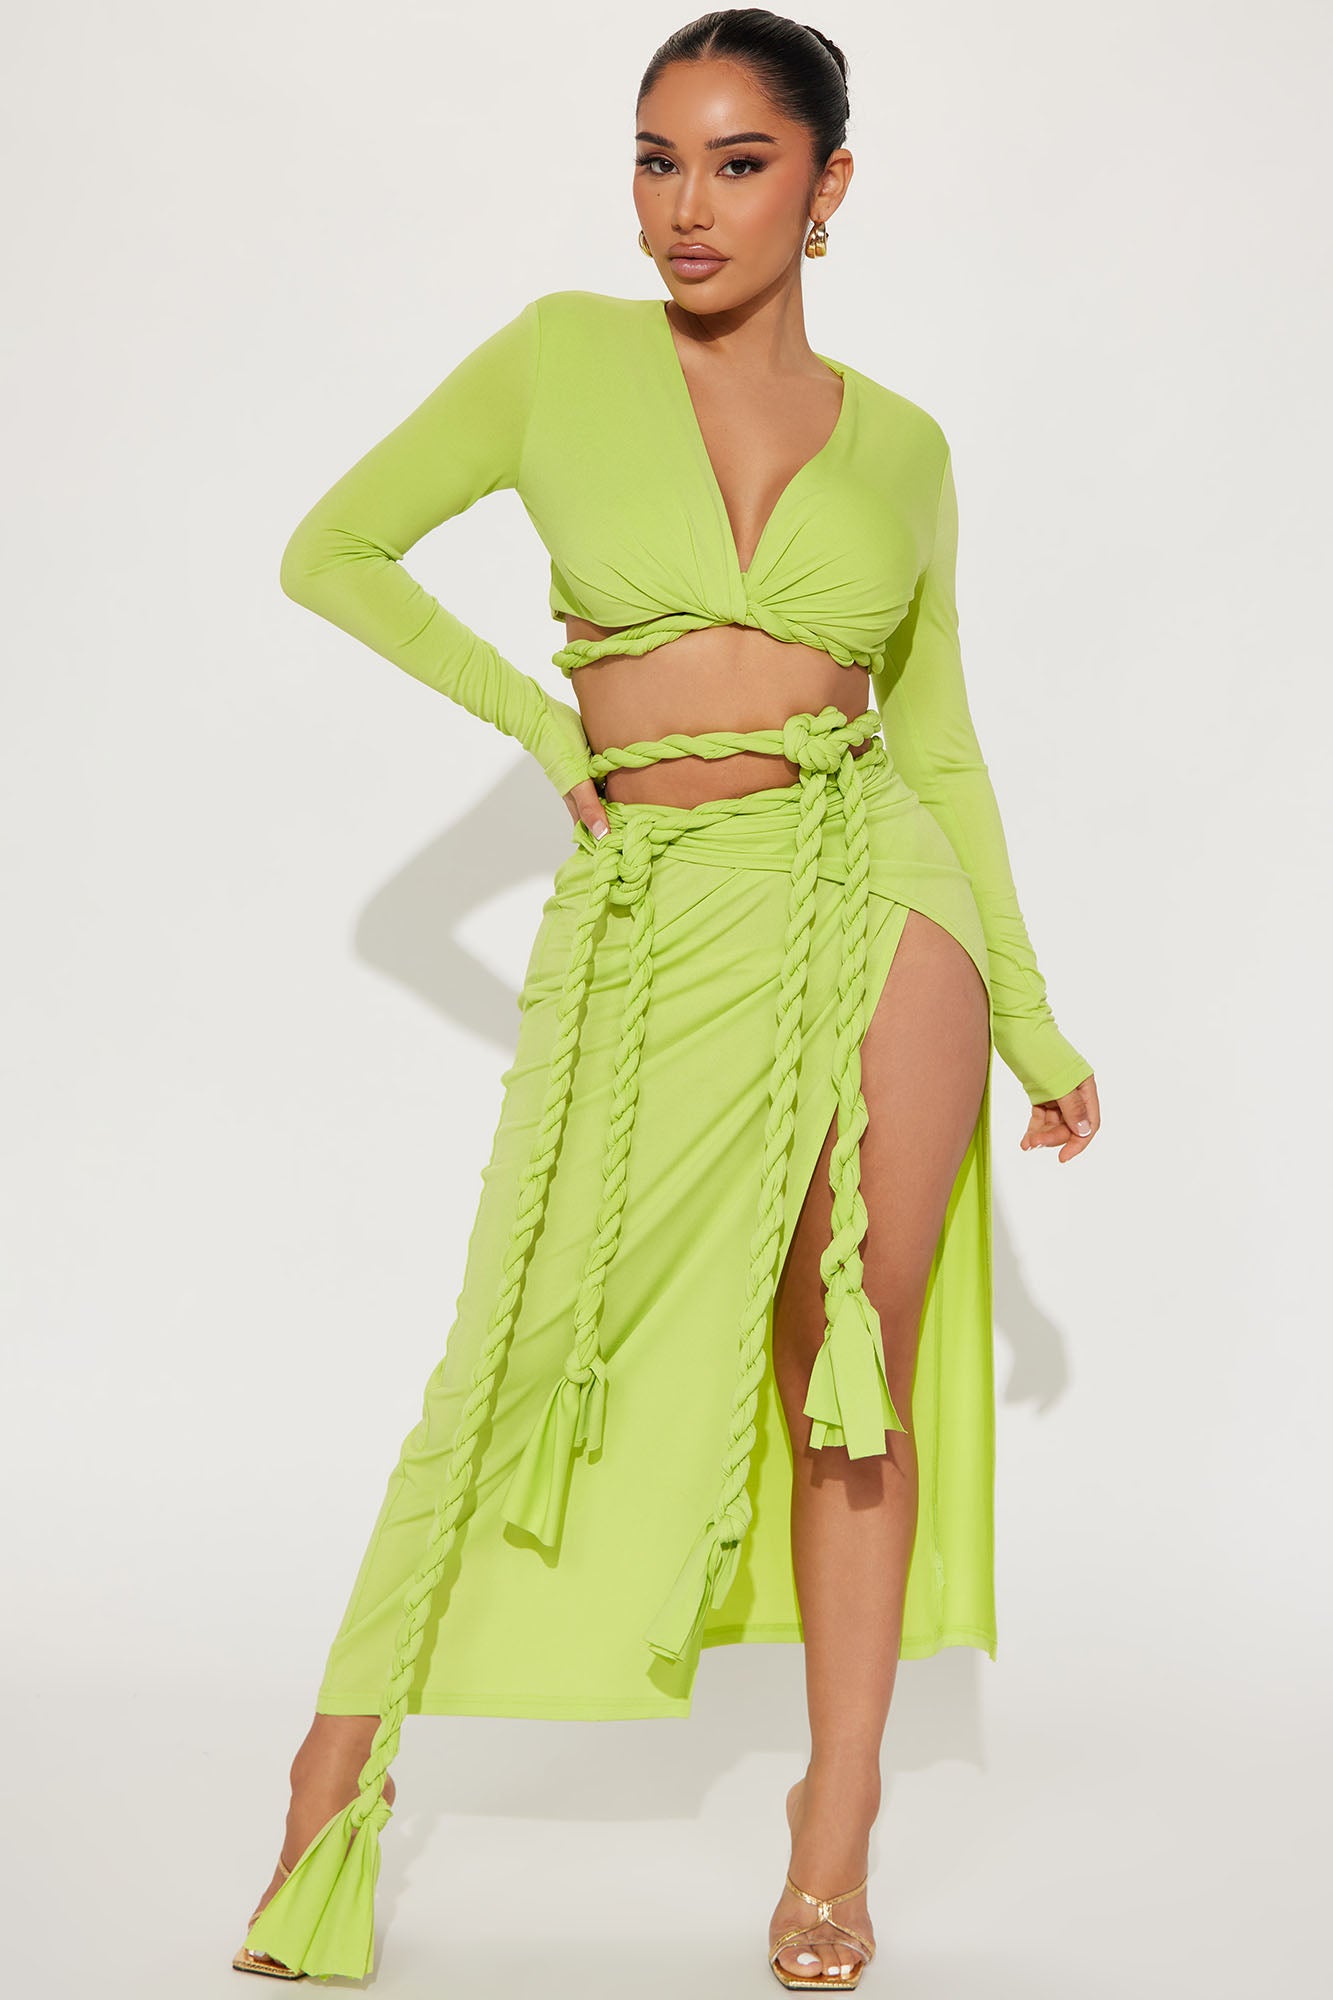 Reina Rope Skirt Set - Lime  Fashion Nova, Matching Sets